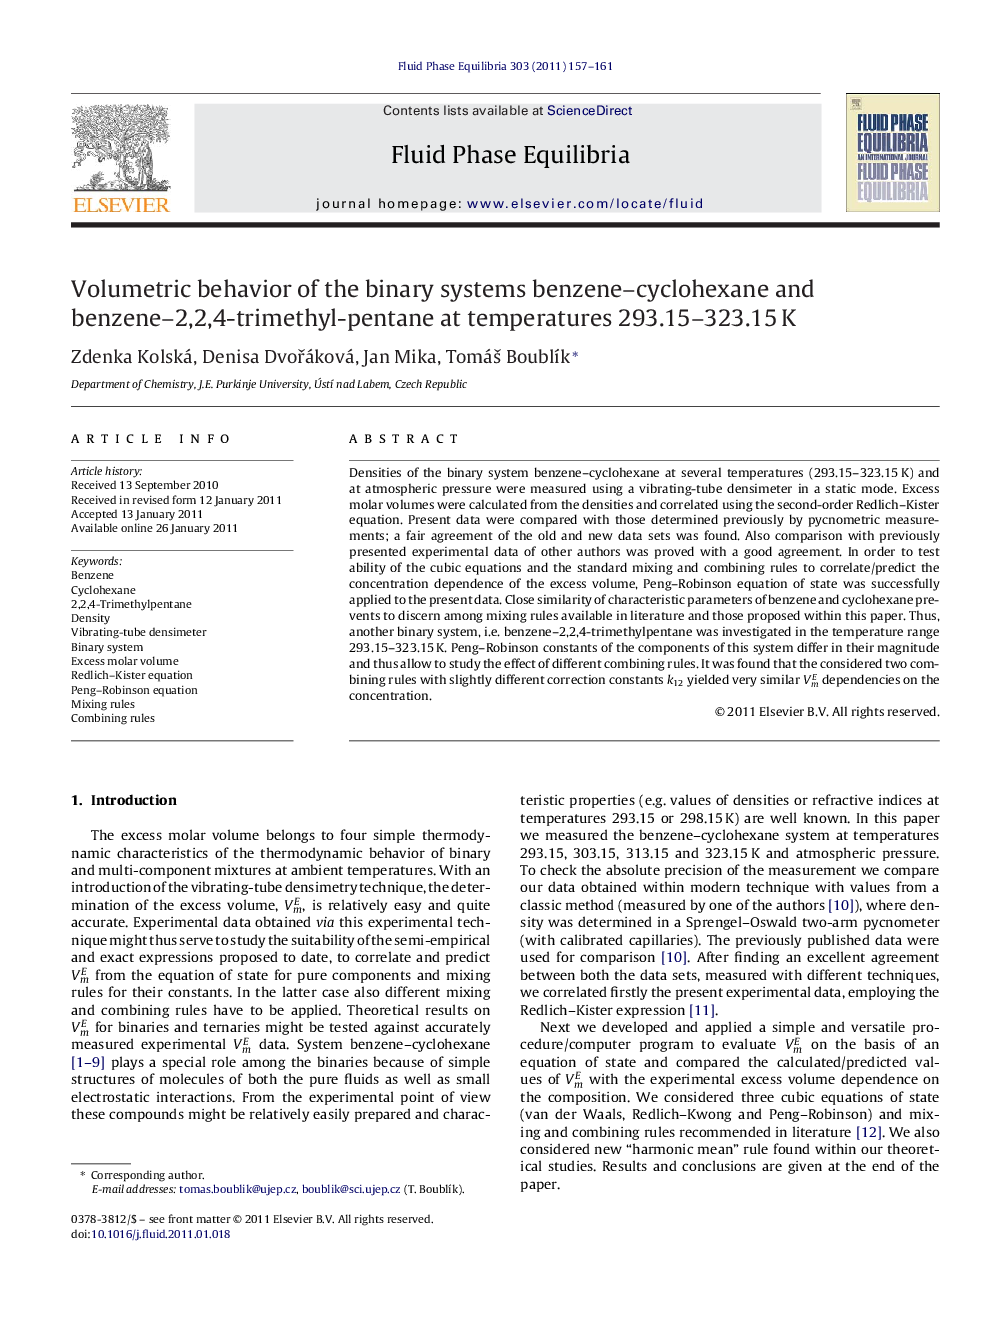 Volumetric behavior of the binary systems benzene-cyclohexane and benzene-2,2,4-trimethyl-pentane at temperatures 293.15-323.15Â K